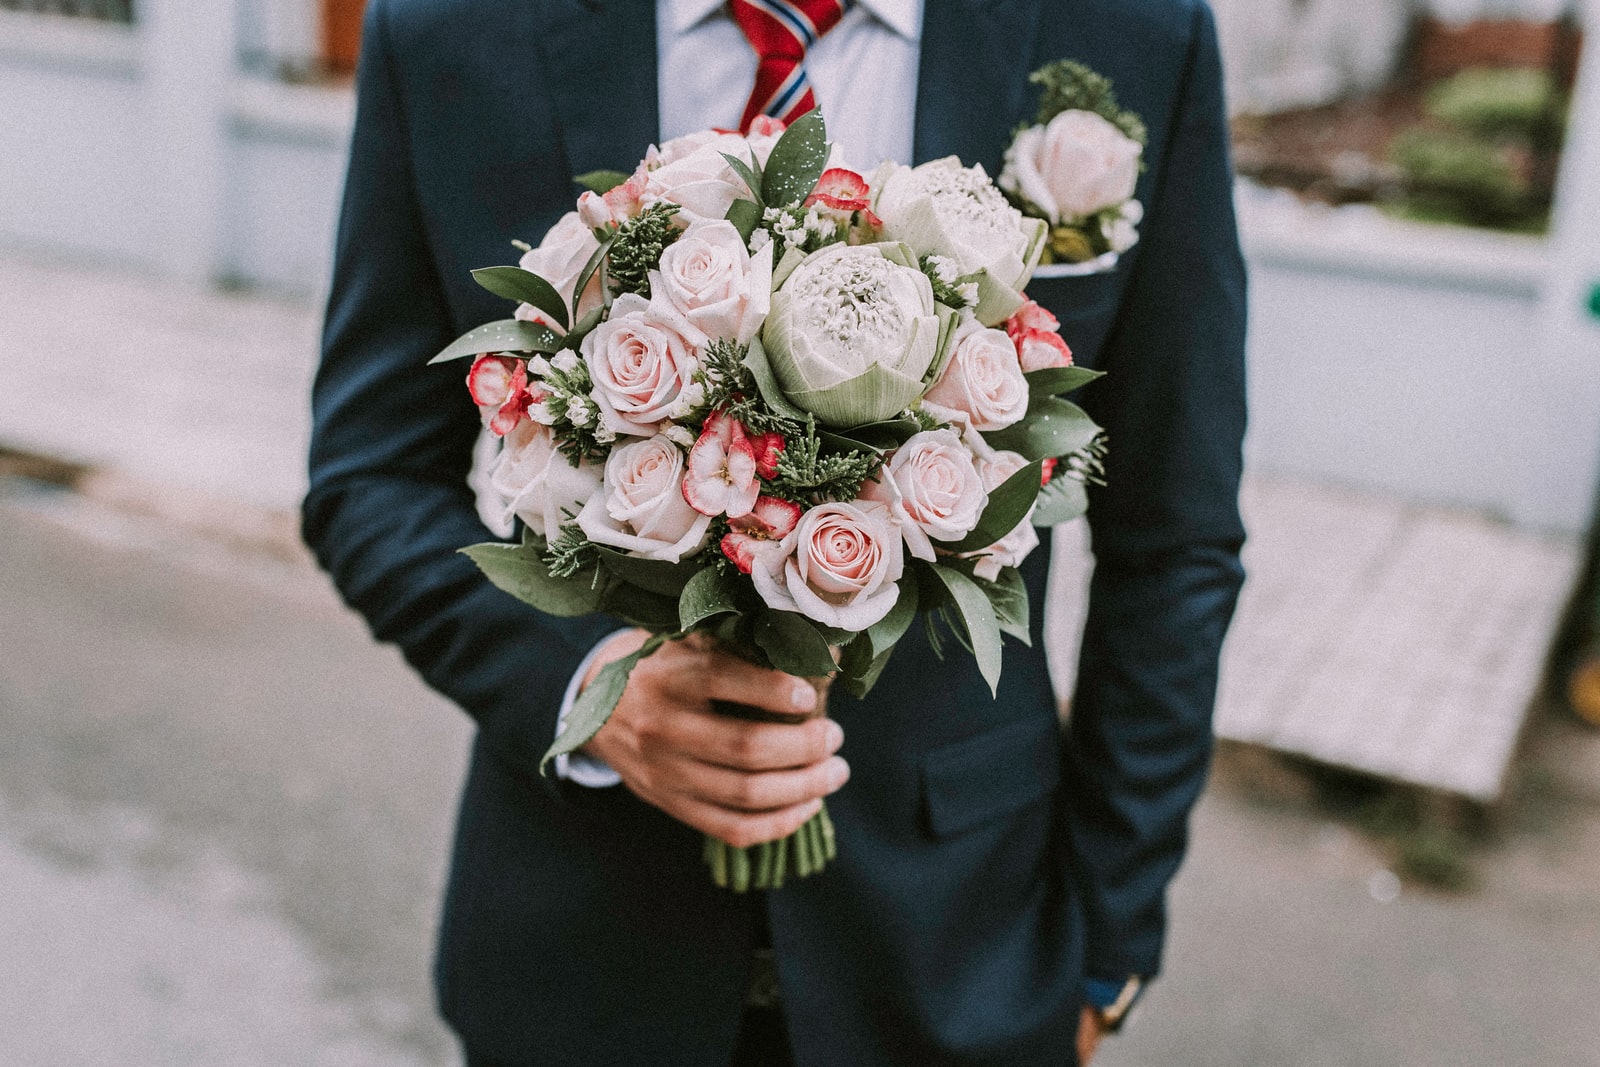 man holding a rose bouquet